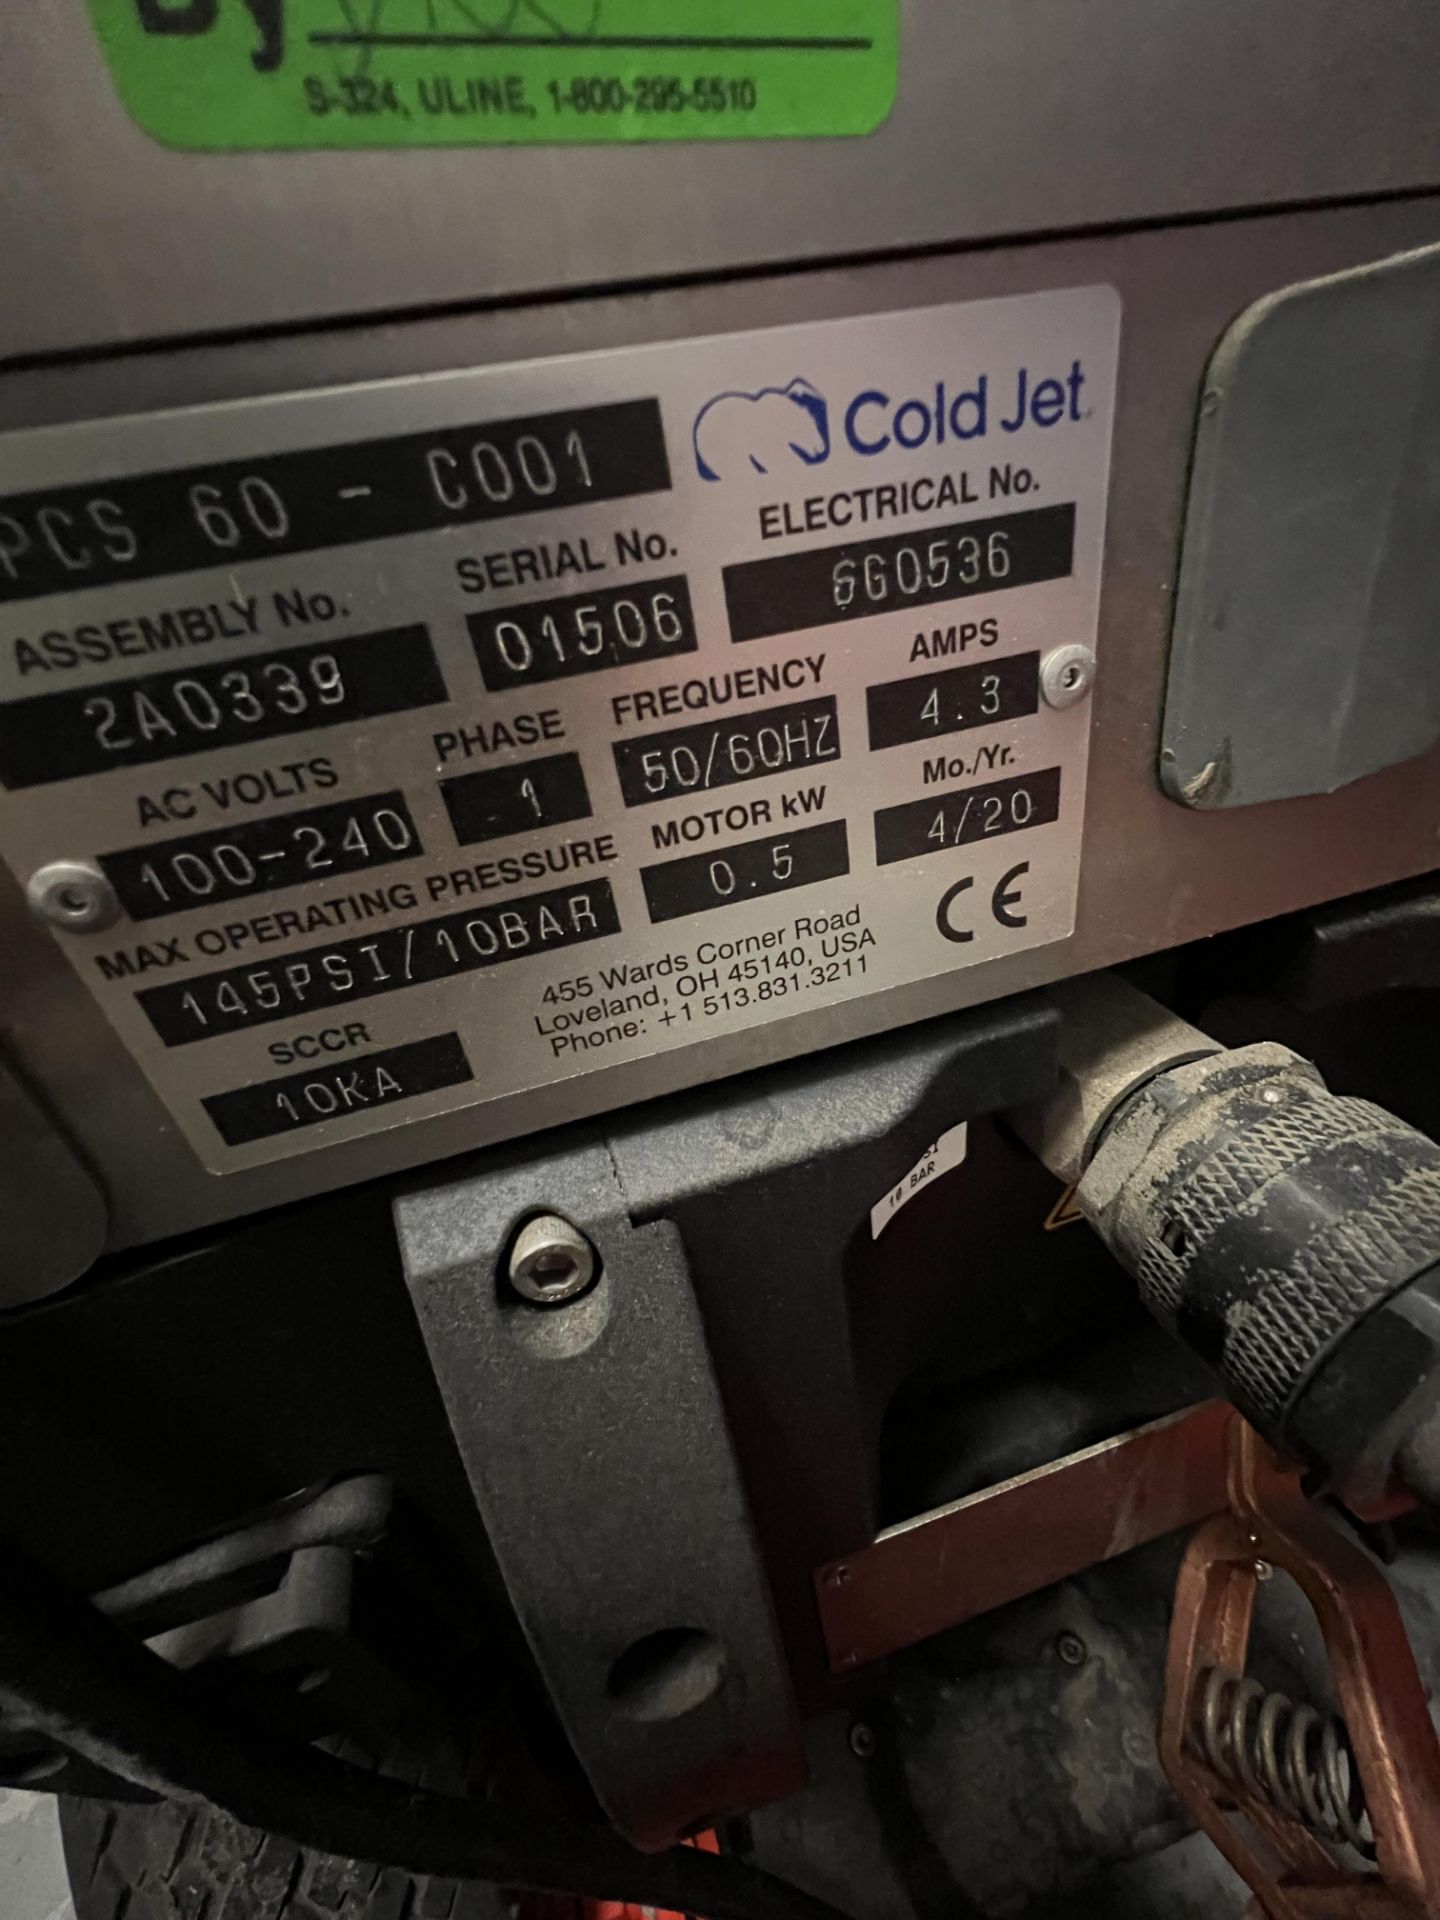 2020 COLD JET DRY ICE BLASTING MACHINE, MODEL PCS 60 - C001, S/N 01506, 100 - 240 V, 1 PHASE - Image 6 of 9